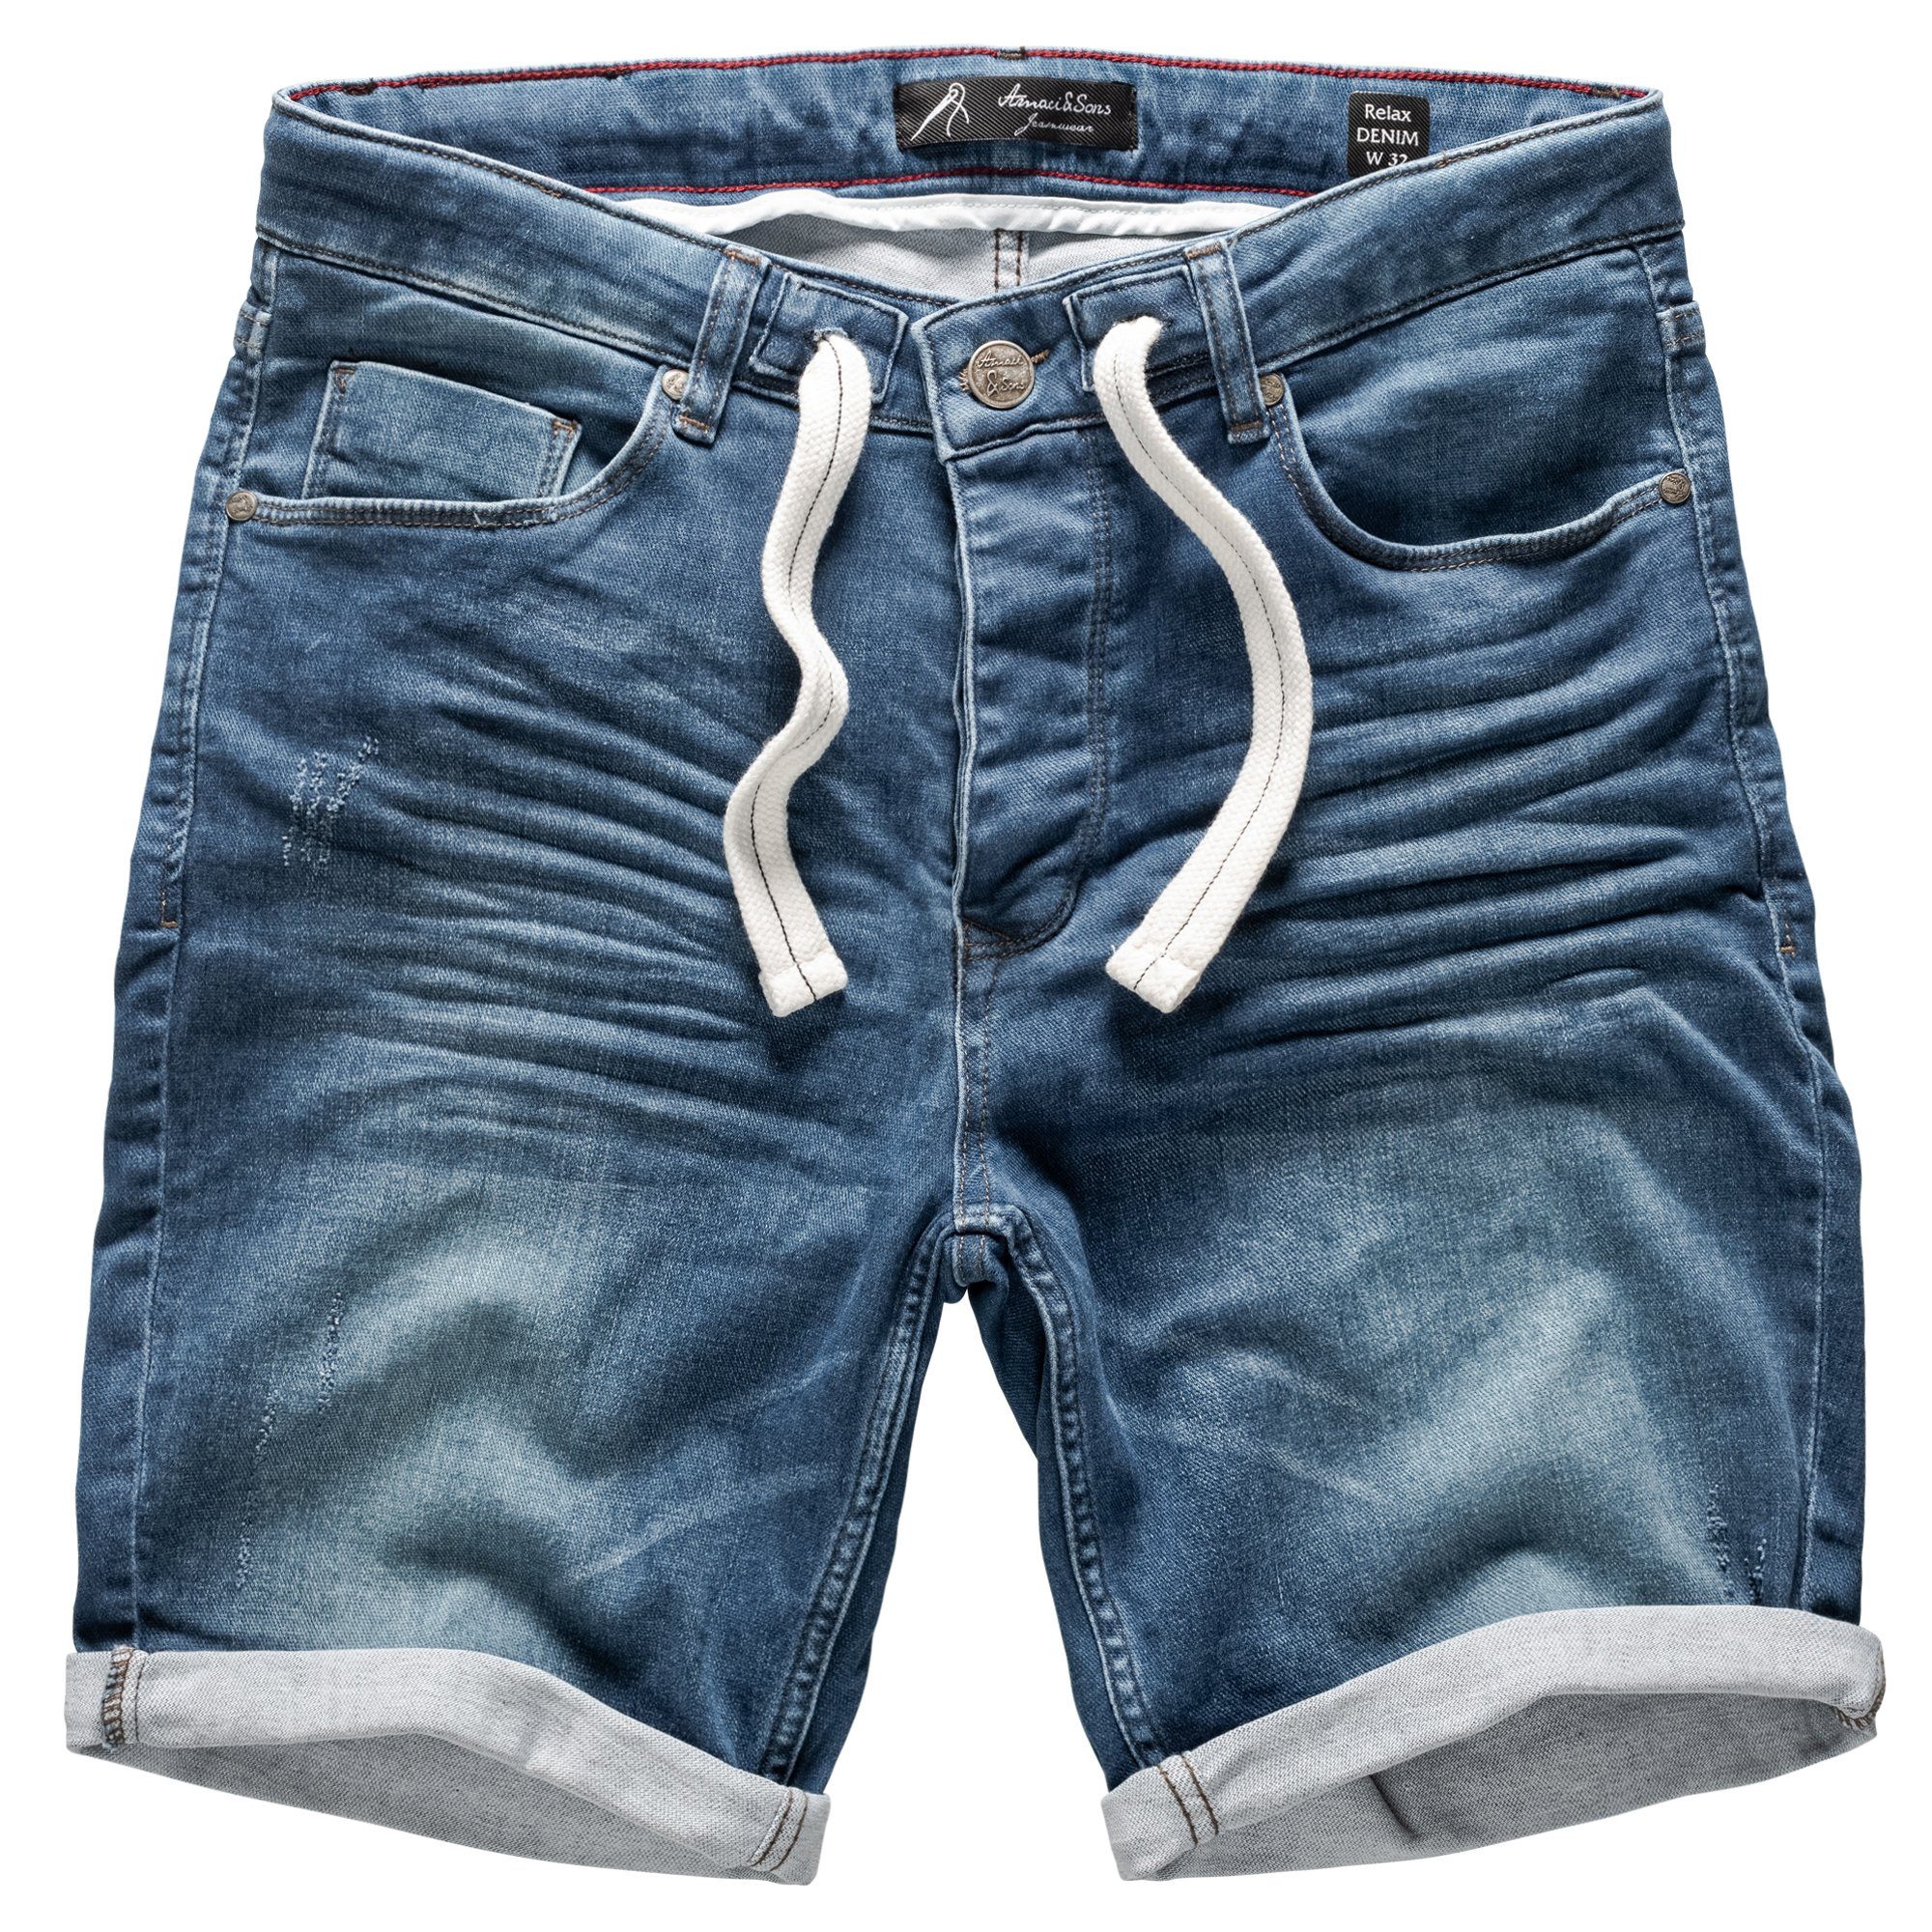 Amaci&Sons Jeansshorts SAN JOSE Destroyed Jeans Shorts H-Blau